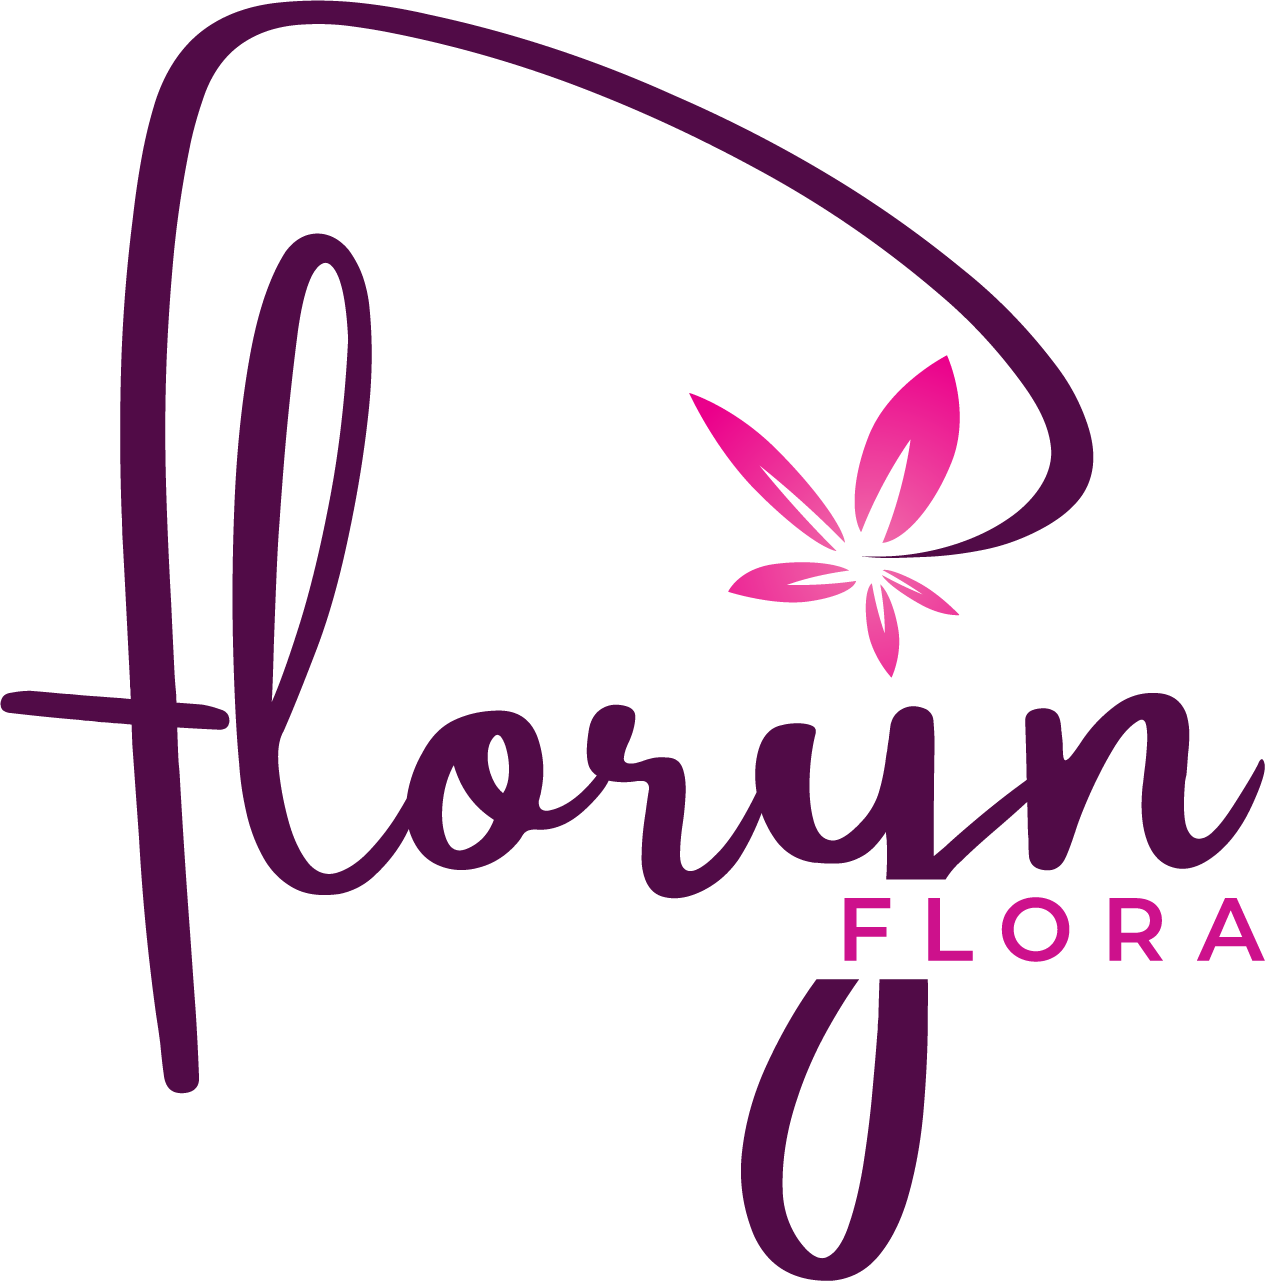 FlorynFlora